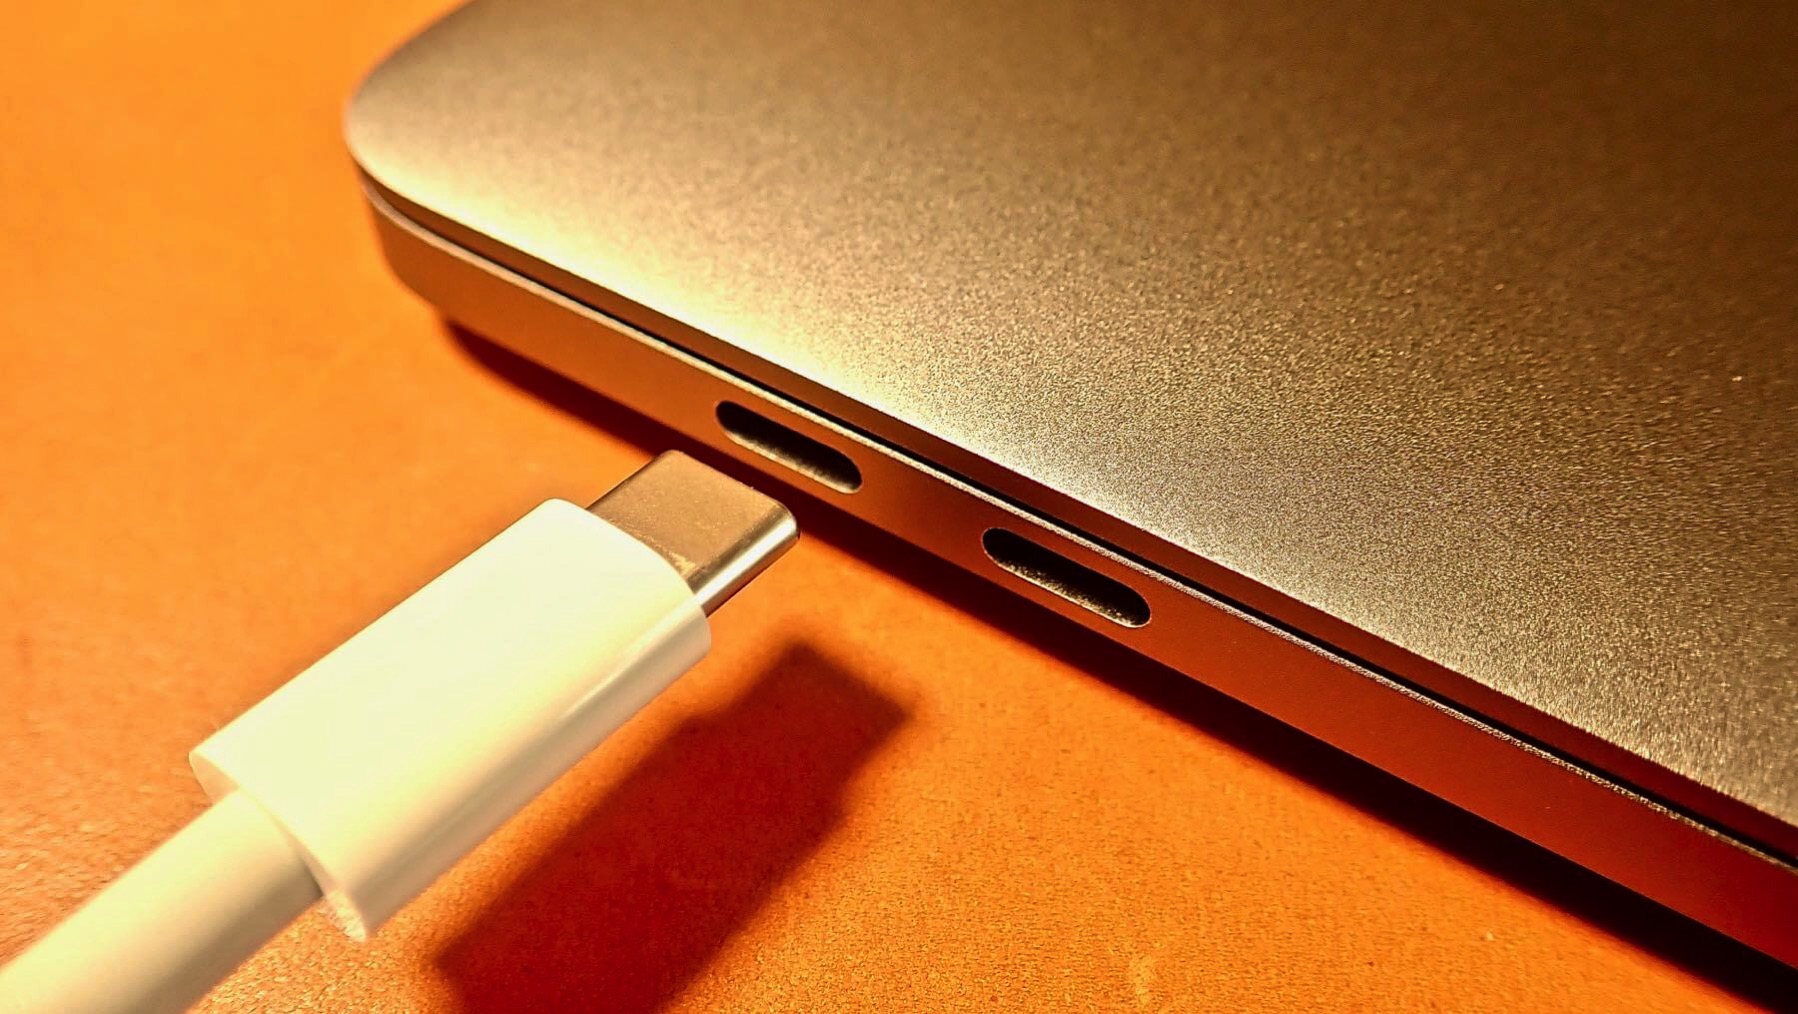 07 Macbook Pro 2017 USB Type C